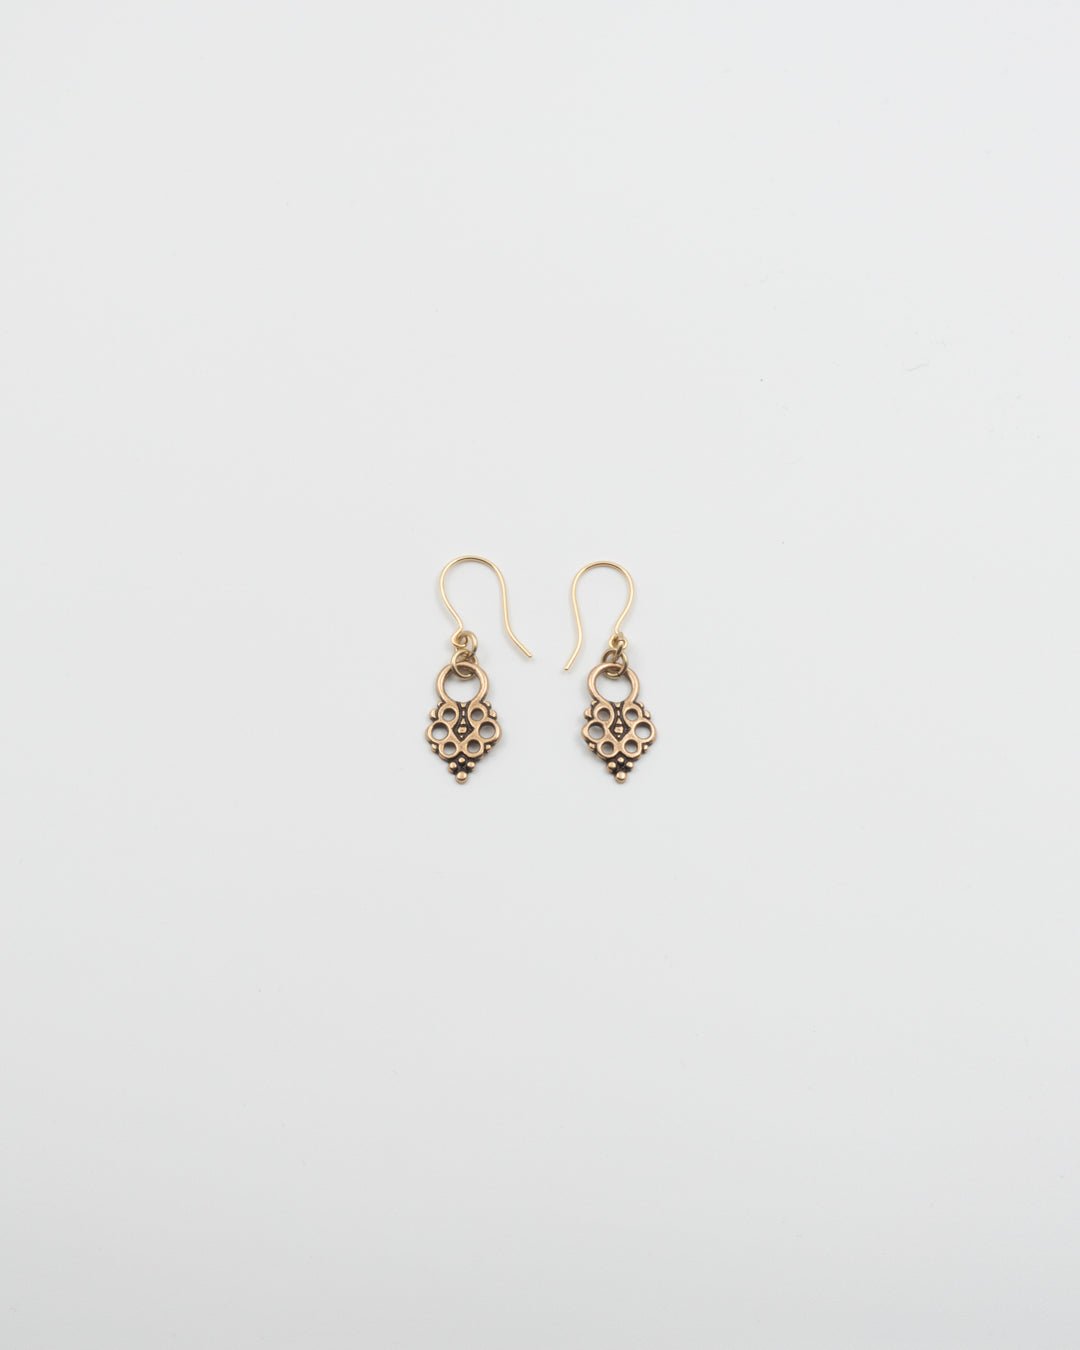 Kept Lapland jewelery earrings bronze